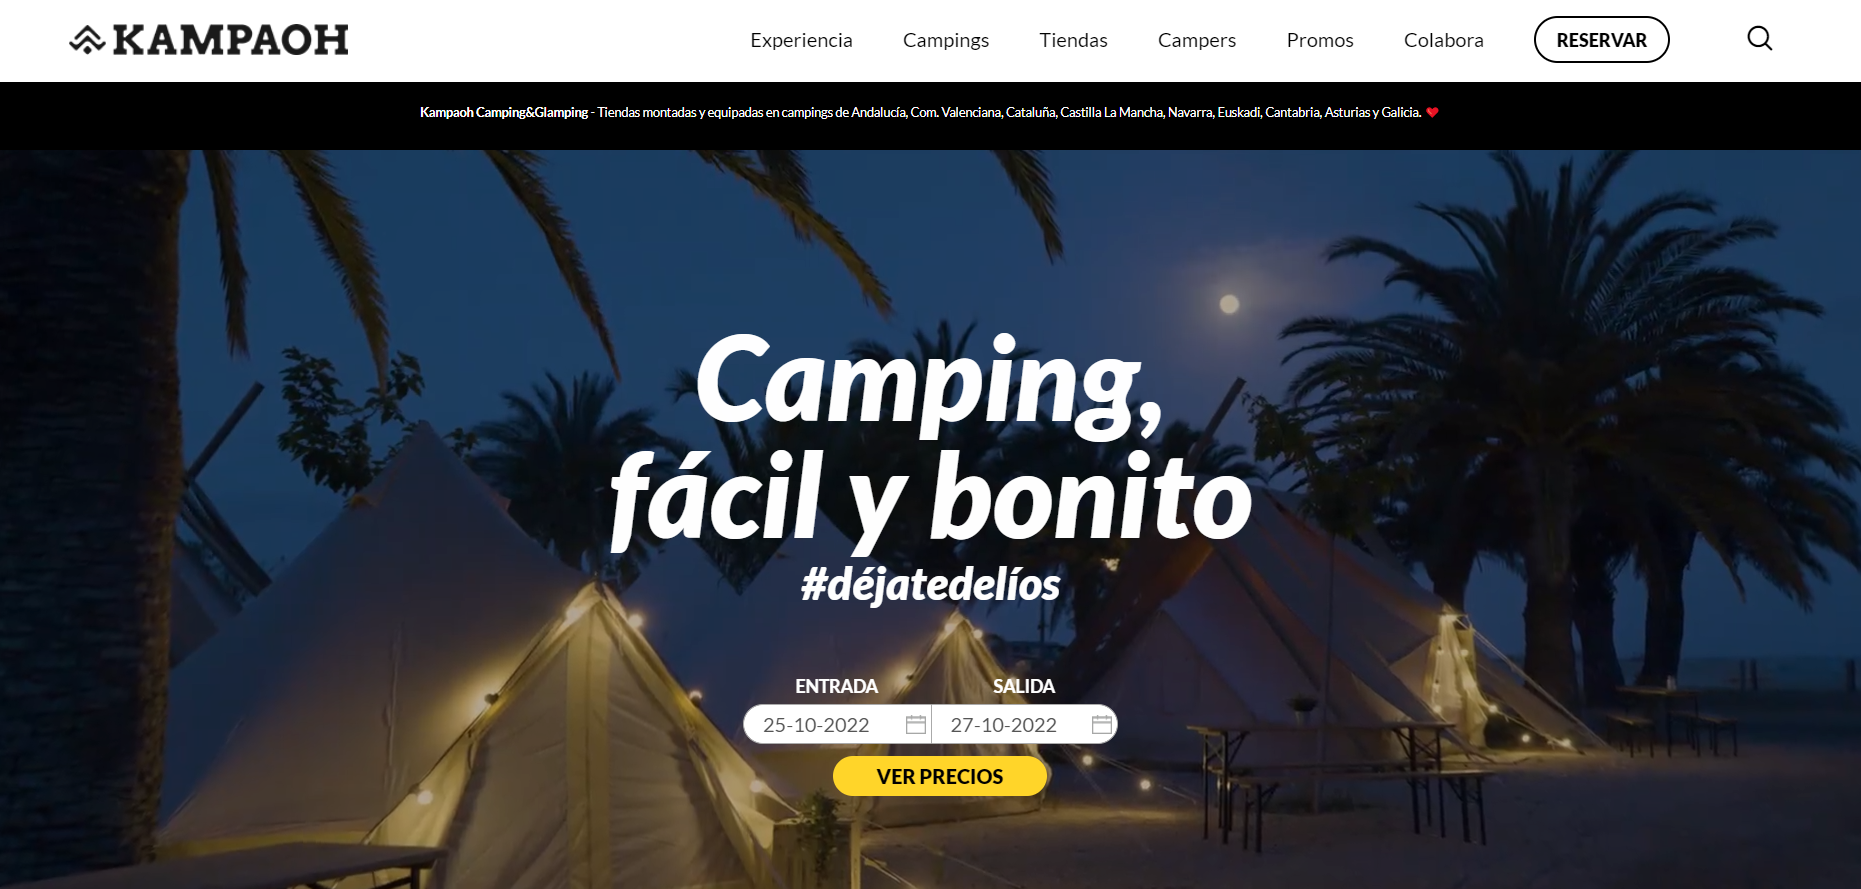 kampaoh web de camping